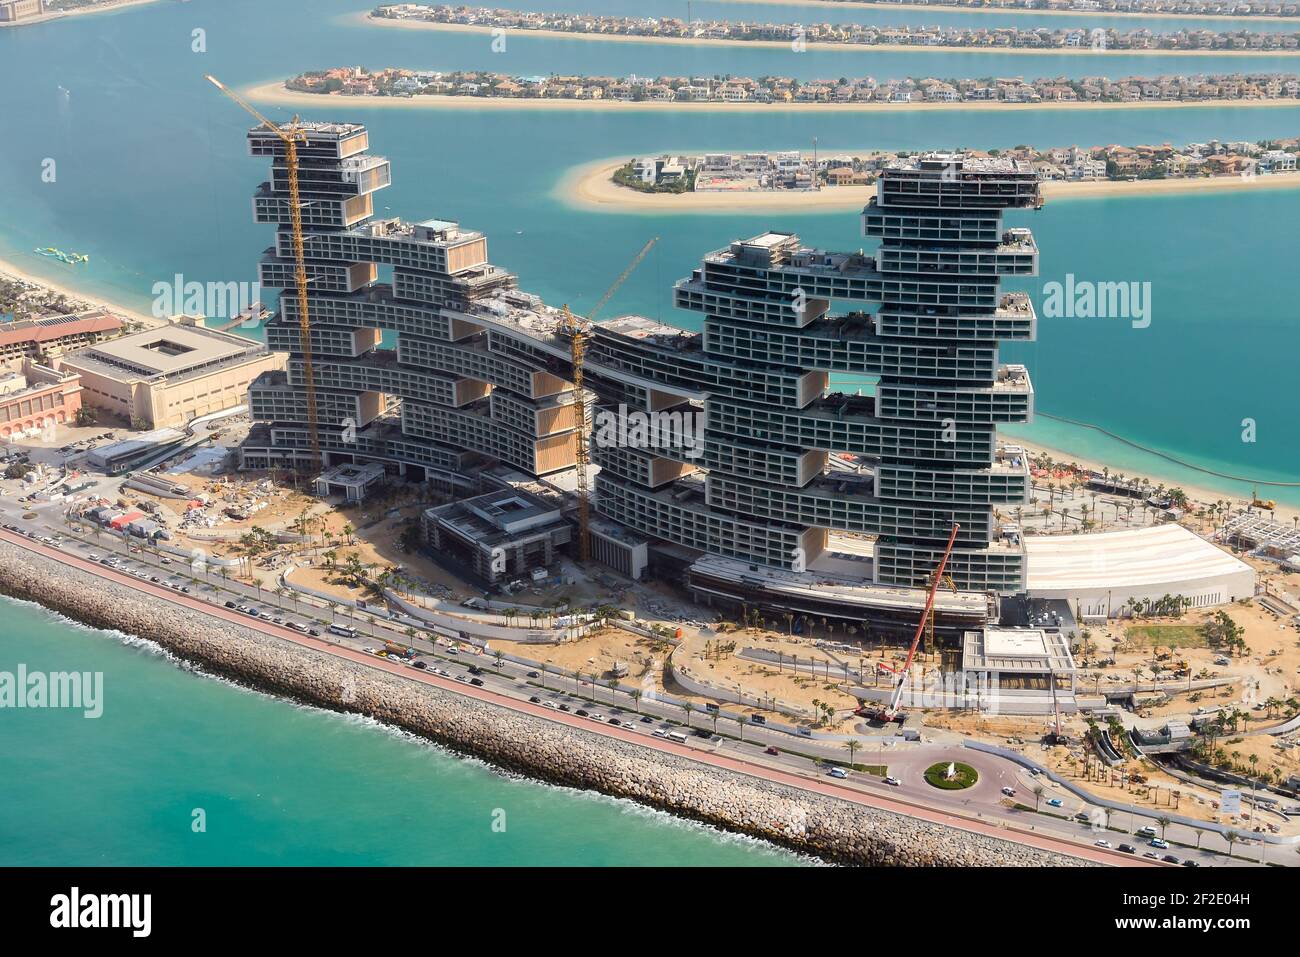 The Royal Atlantis Resort & Residences under construction on the Palm, Dubai, United Arab Emirates. Building work development in Palm Jumeirah. Stock Photo